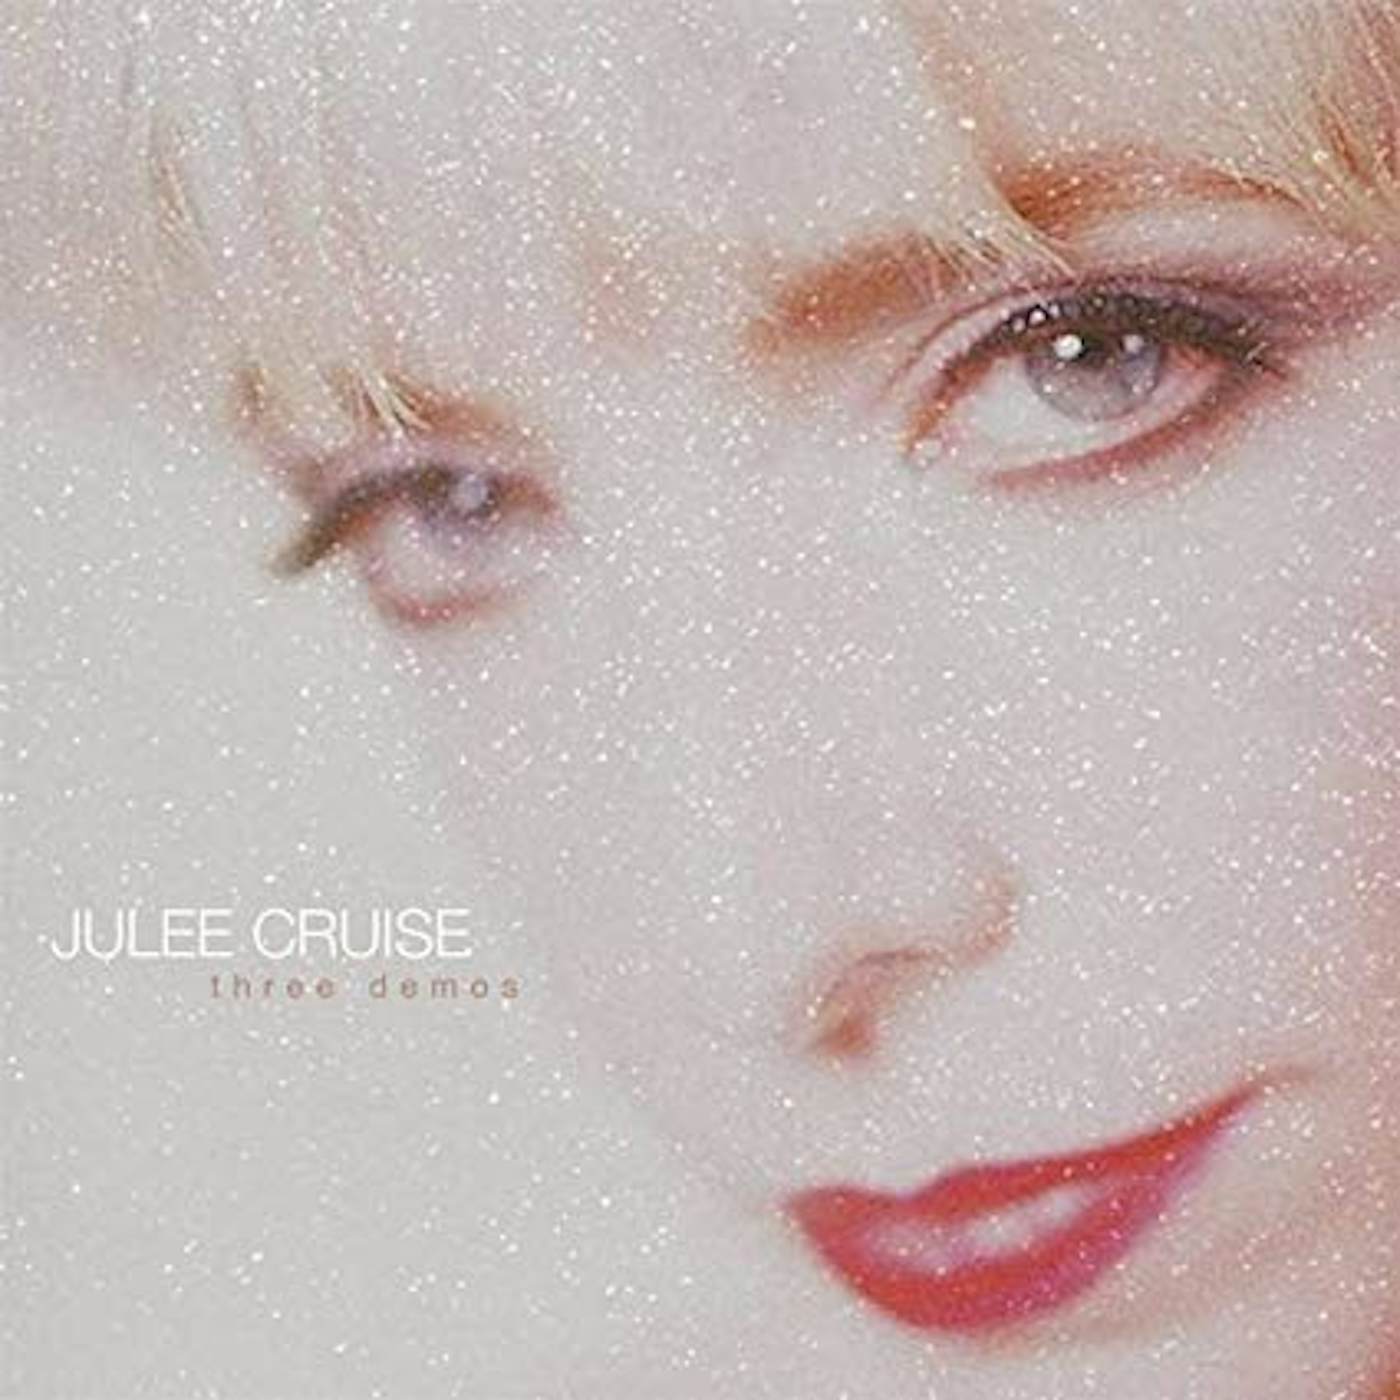 Julee Cruise Three Demos Vinyl Record